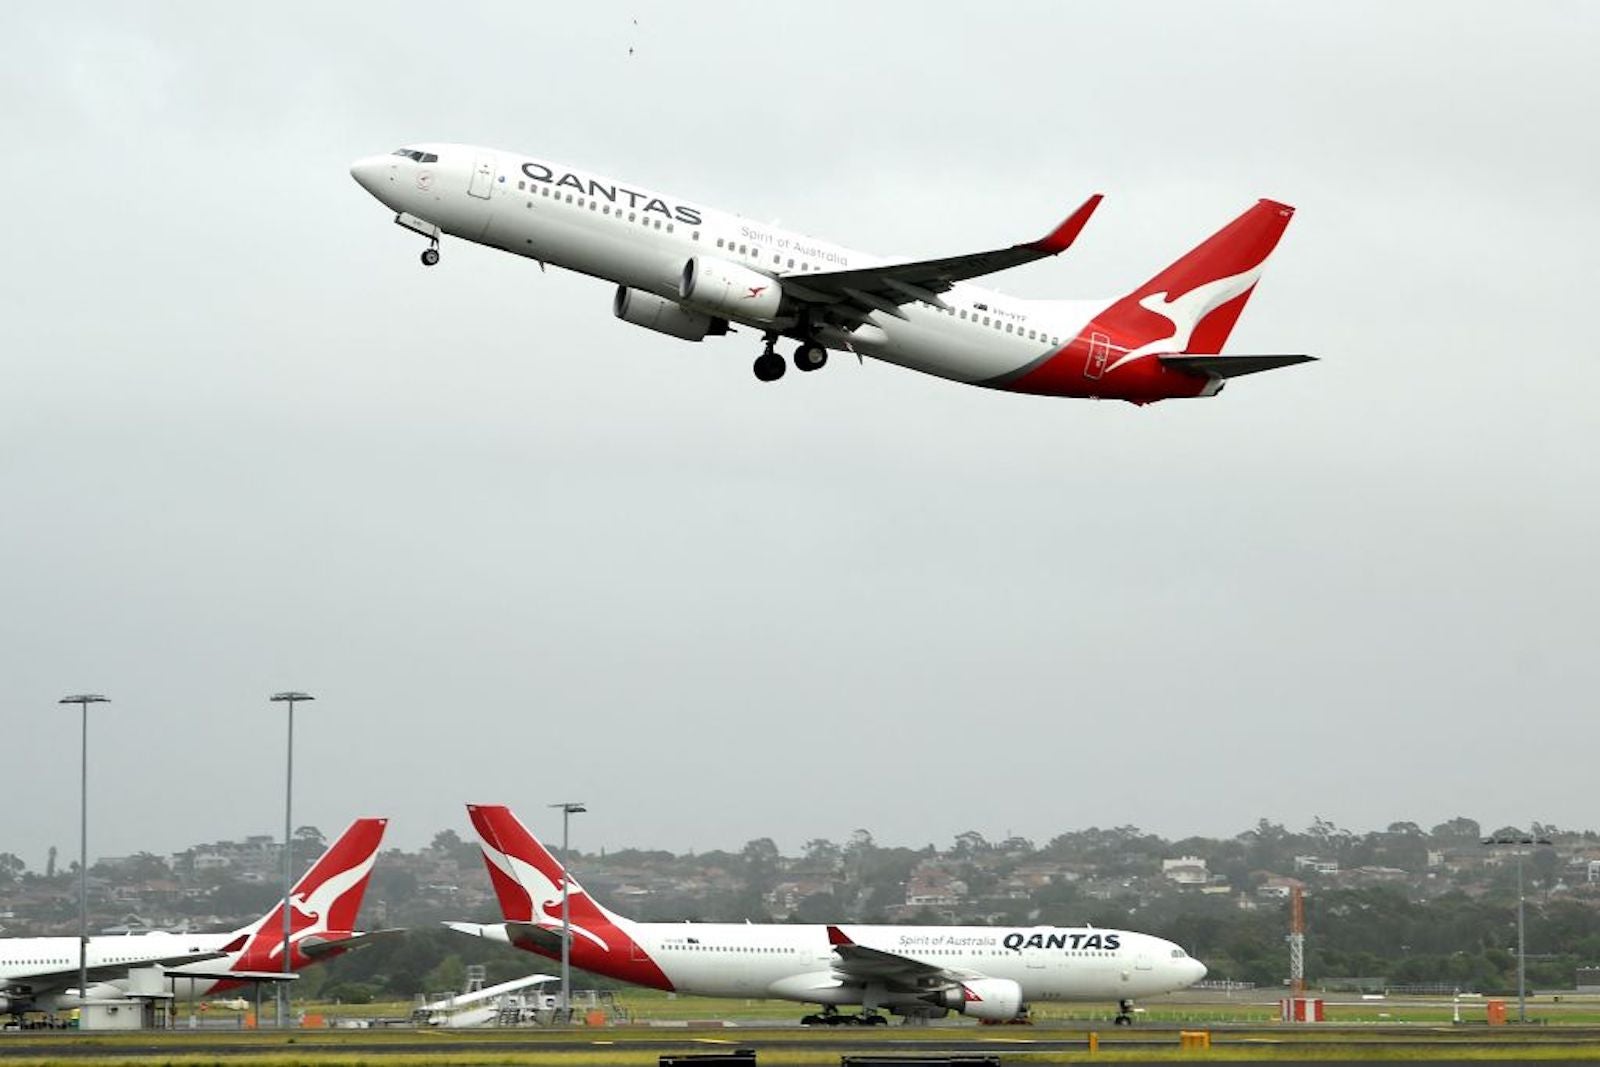 Qantas will ban unvaccinated travelers when it resumes international flights